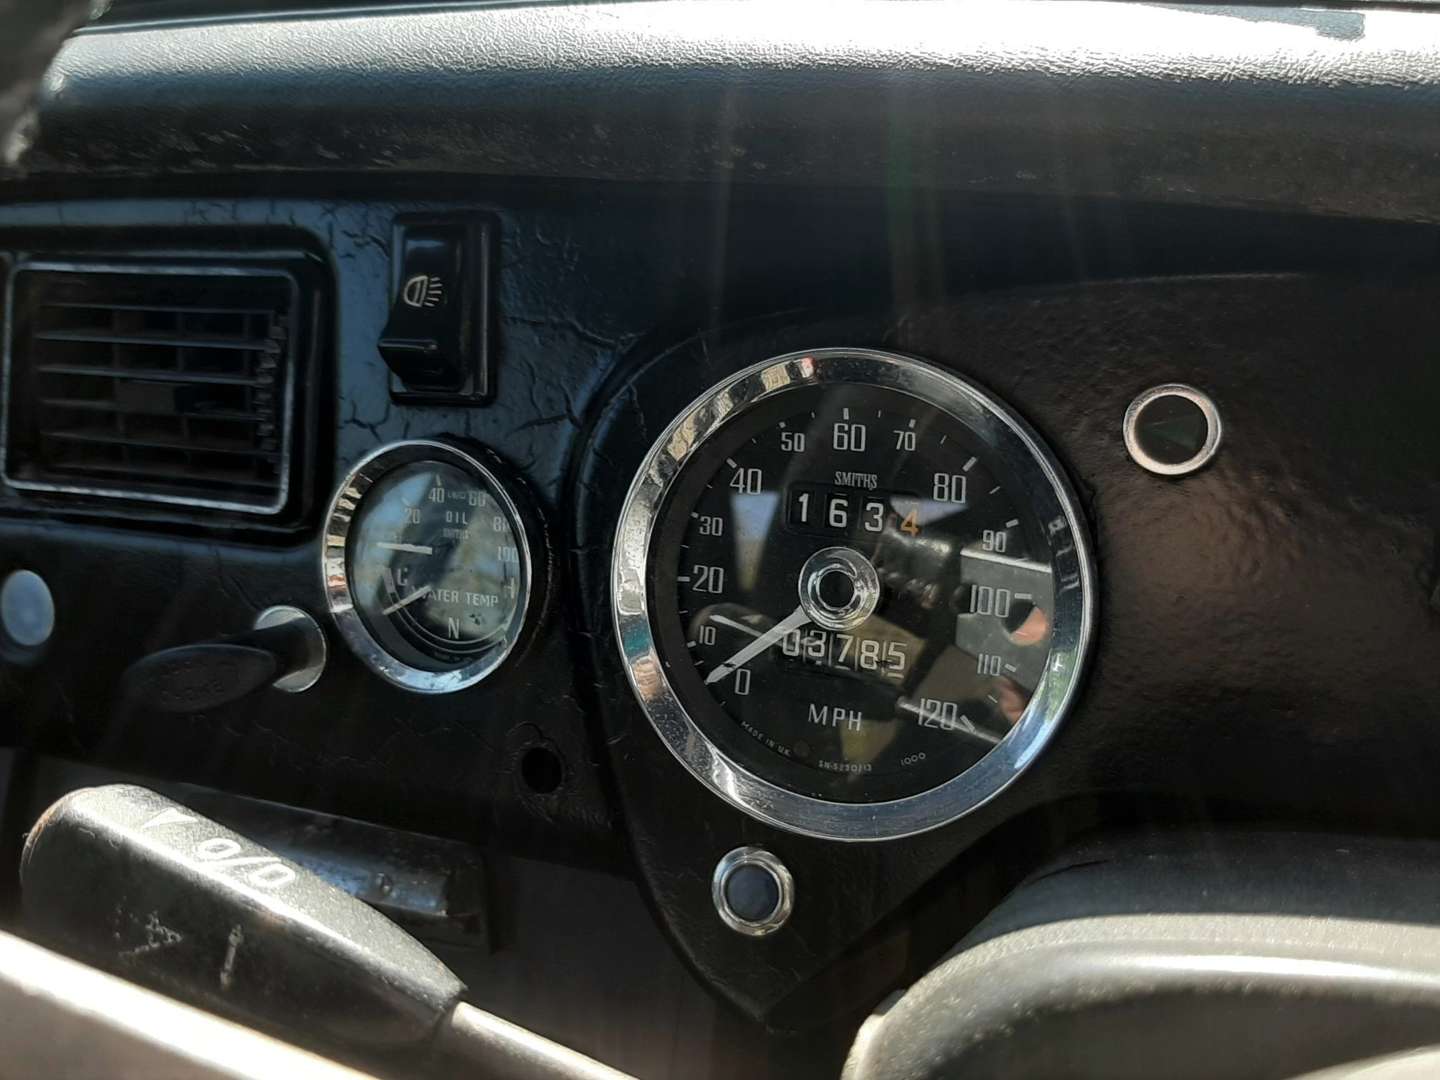 <p>1975 MG B GT</p>